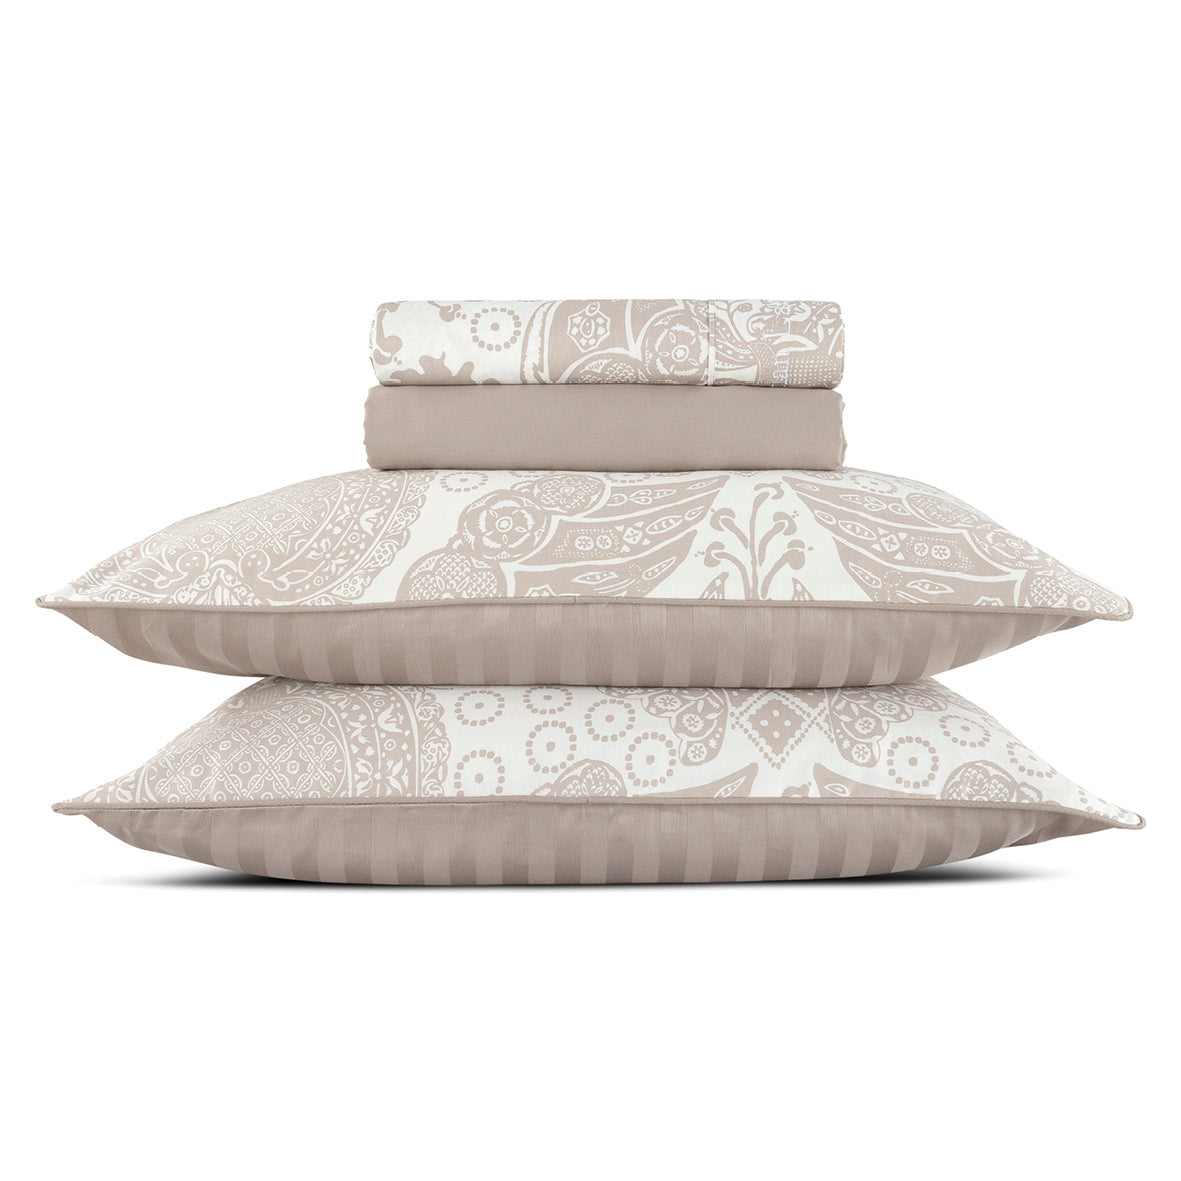 Set of sheets : fitted sheet, flat sheet, pillowcase(s) in cotton satin - Arles Taupe Drap plat : 230 x 290 cm Drap-housse : 170 180 x 190 200 cm